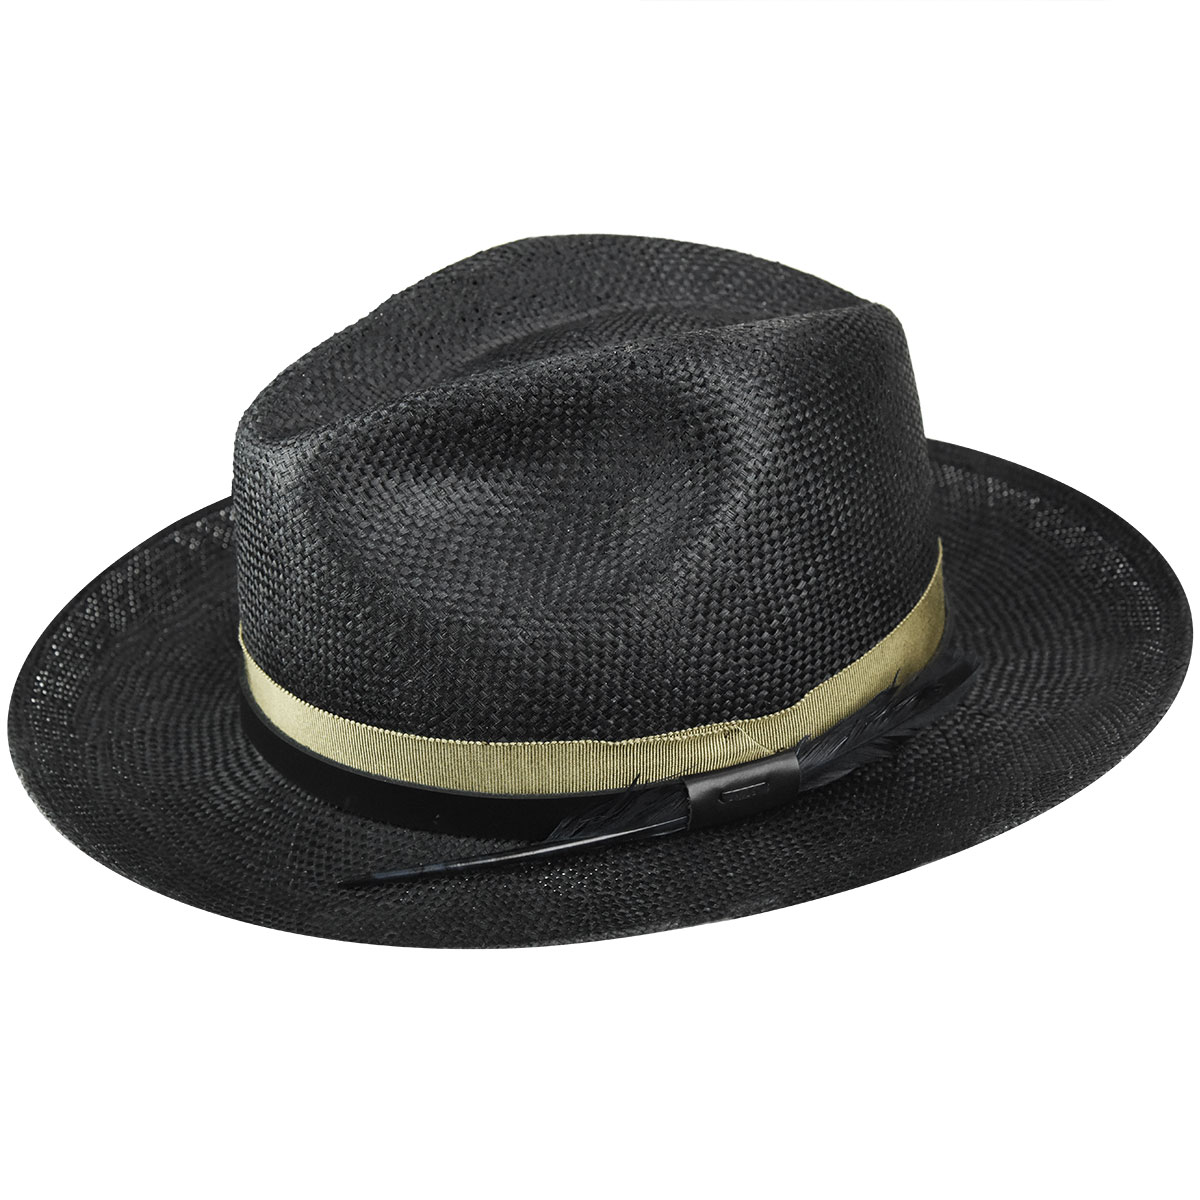 Hats - Black